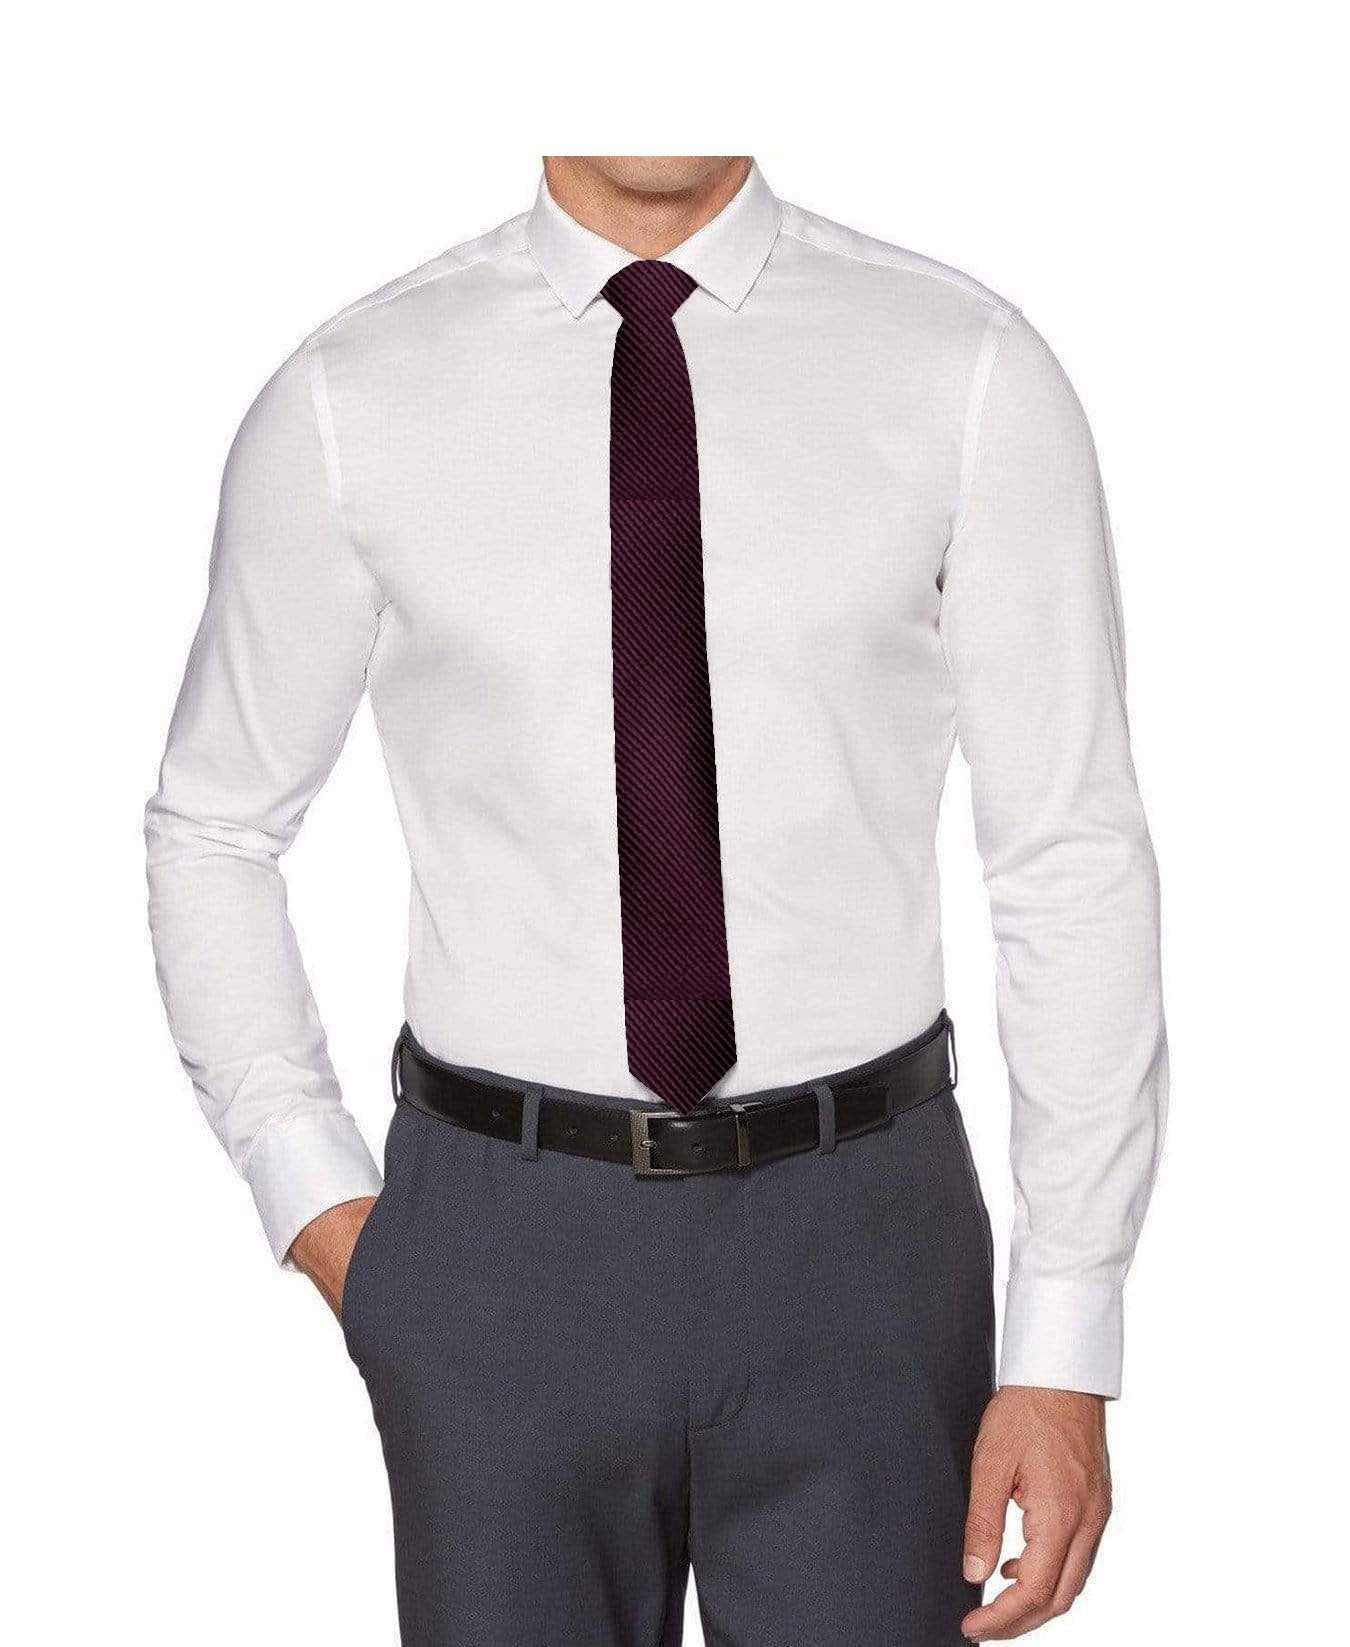 Perry Ellis Boys Dress Shirts w Burgundy Tie Solid Shirts w Colored Tie